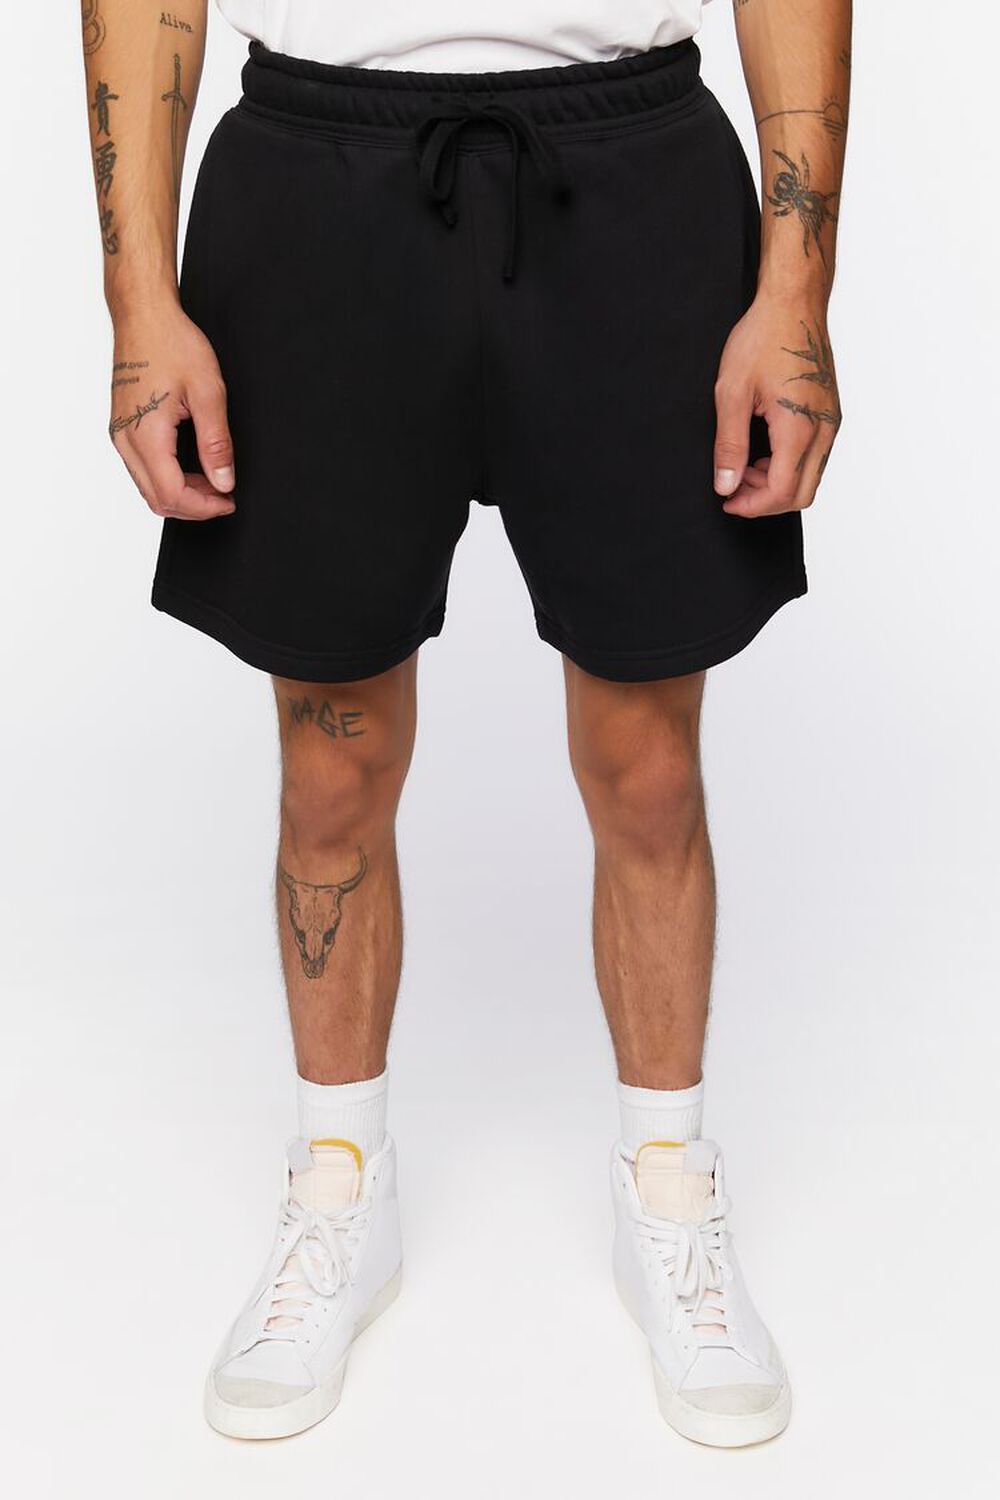 BLACK Fleece Drawstring Shorts, image 2